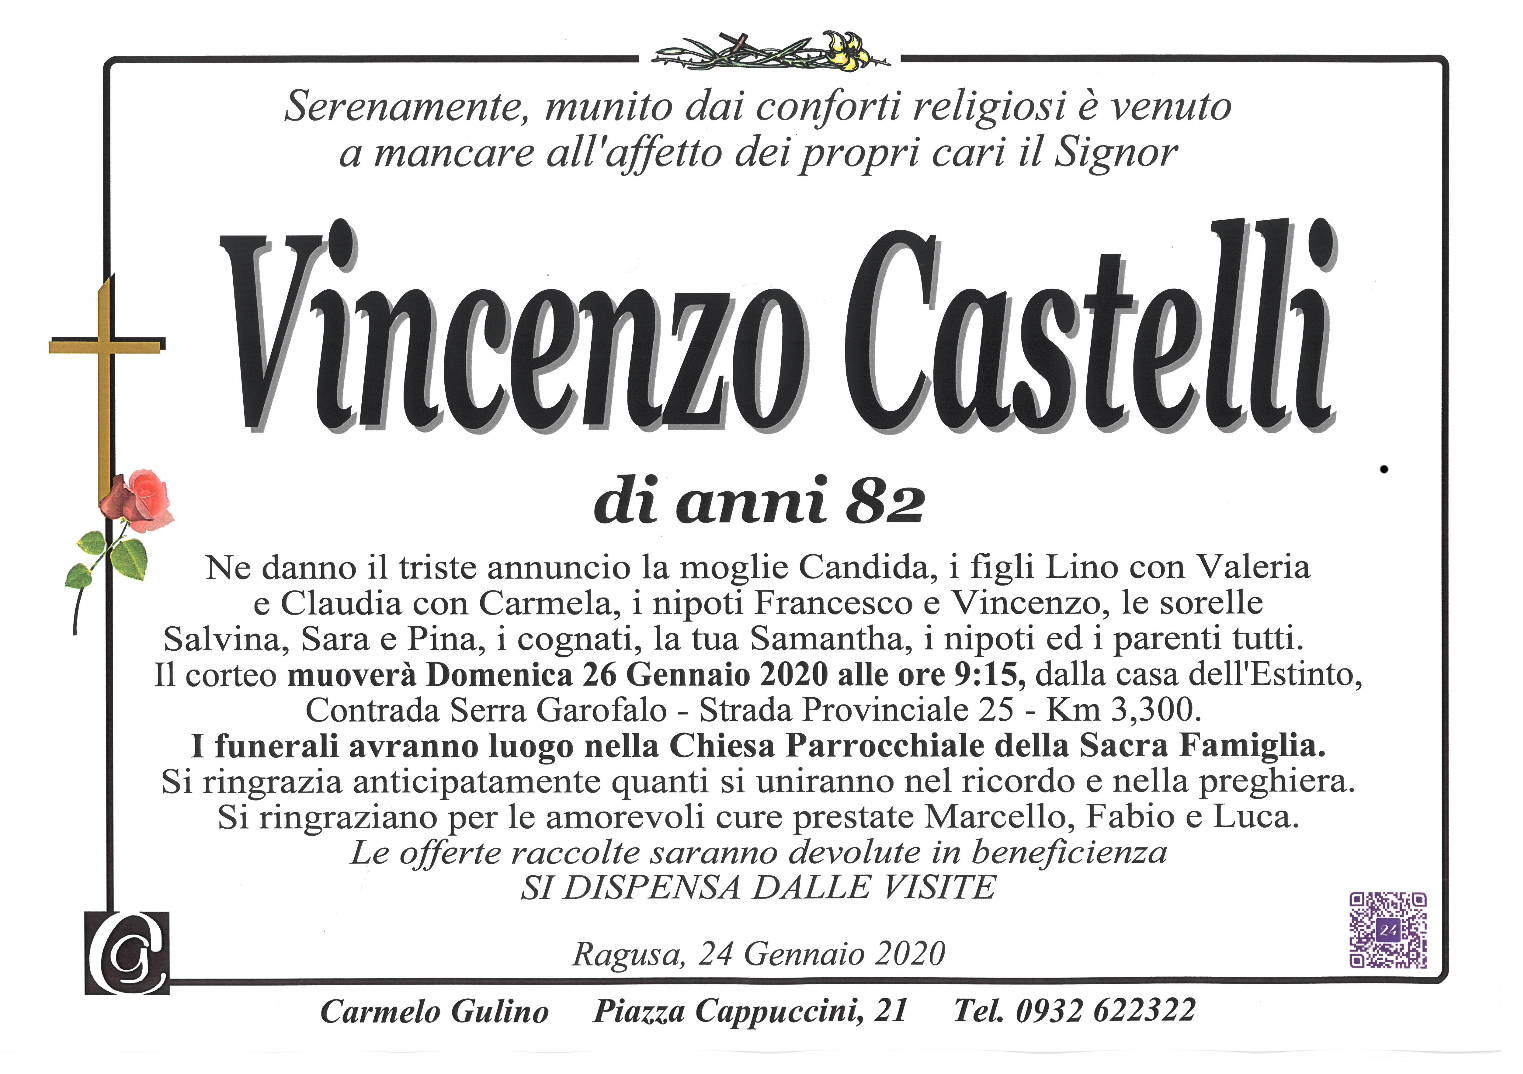 Vincenzo Castelli